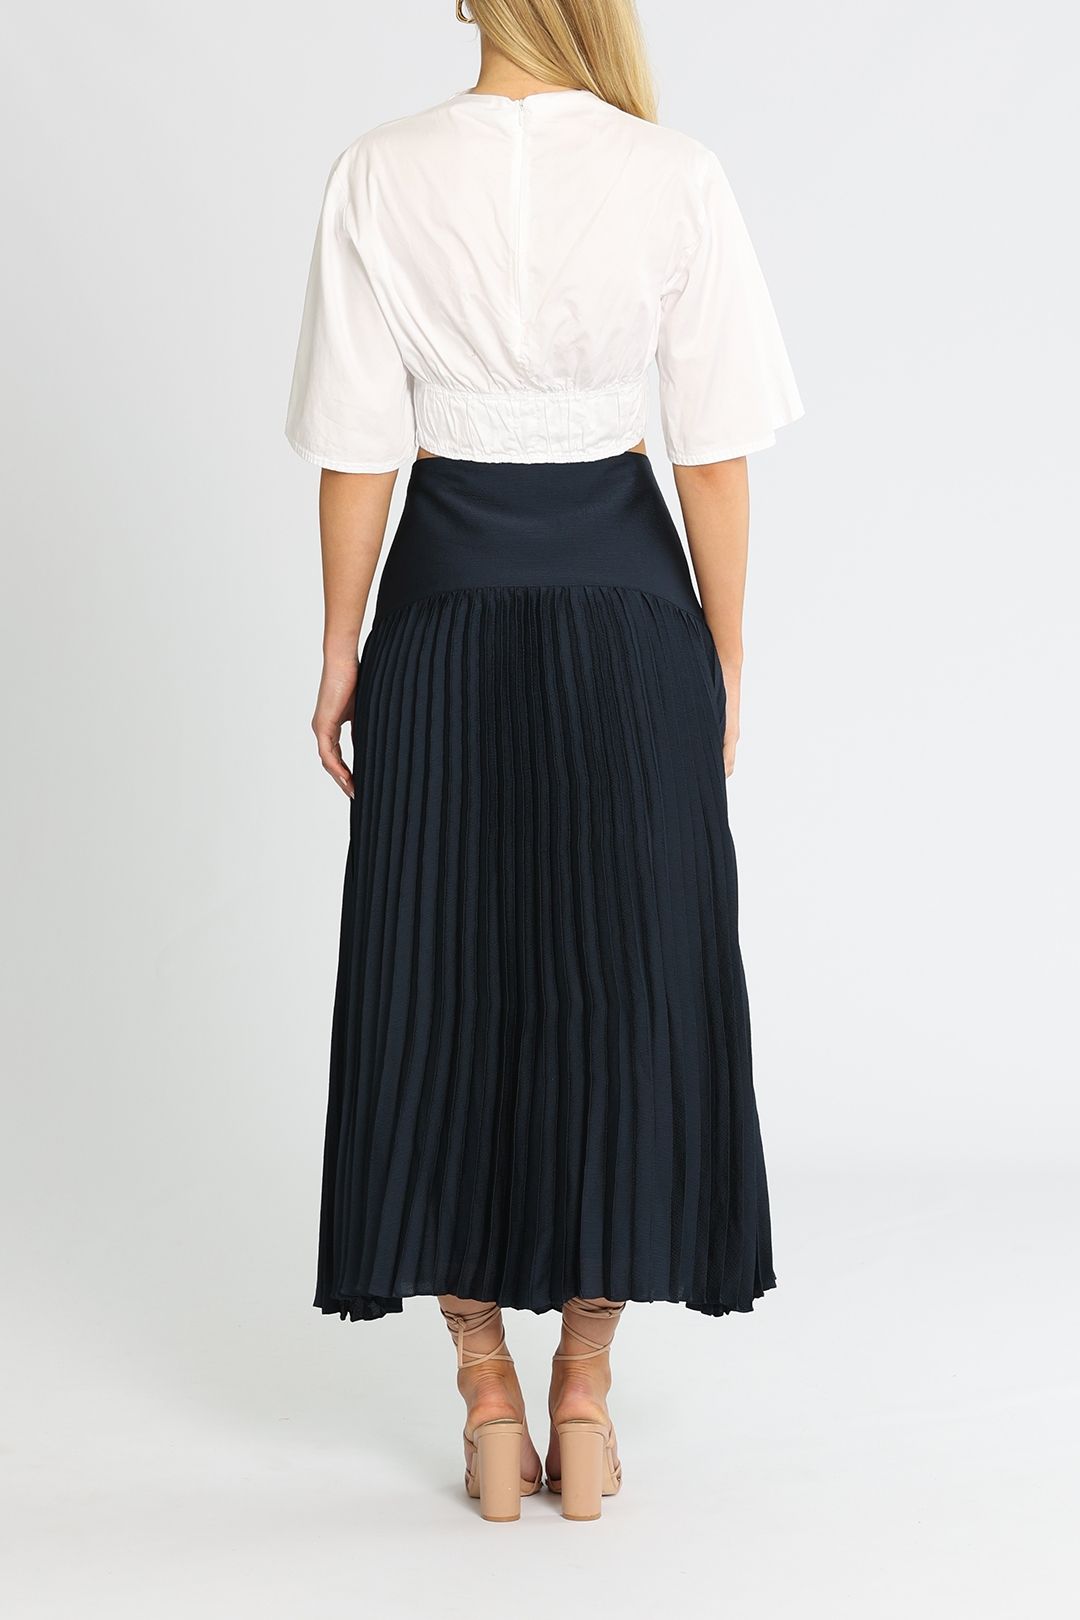 Maison Scotch Longer Length Skirt Pleats